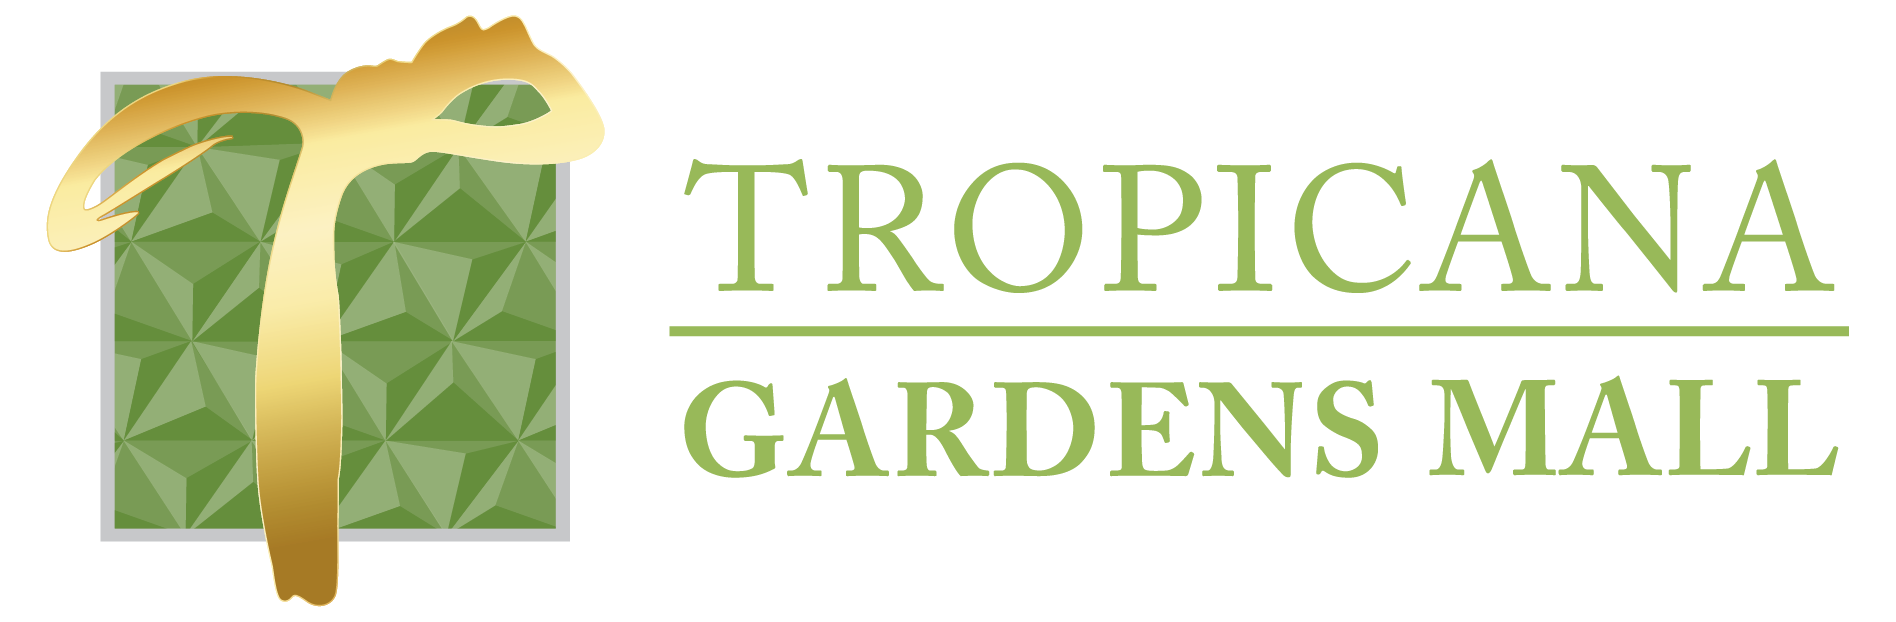 Tropicana gardens mall vaccine type